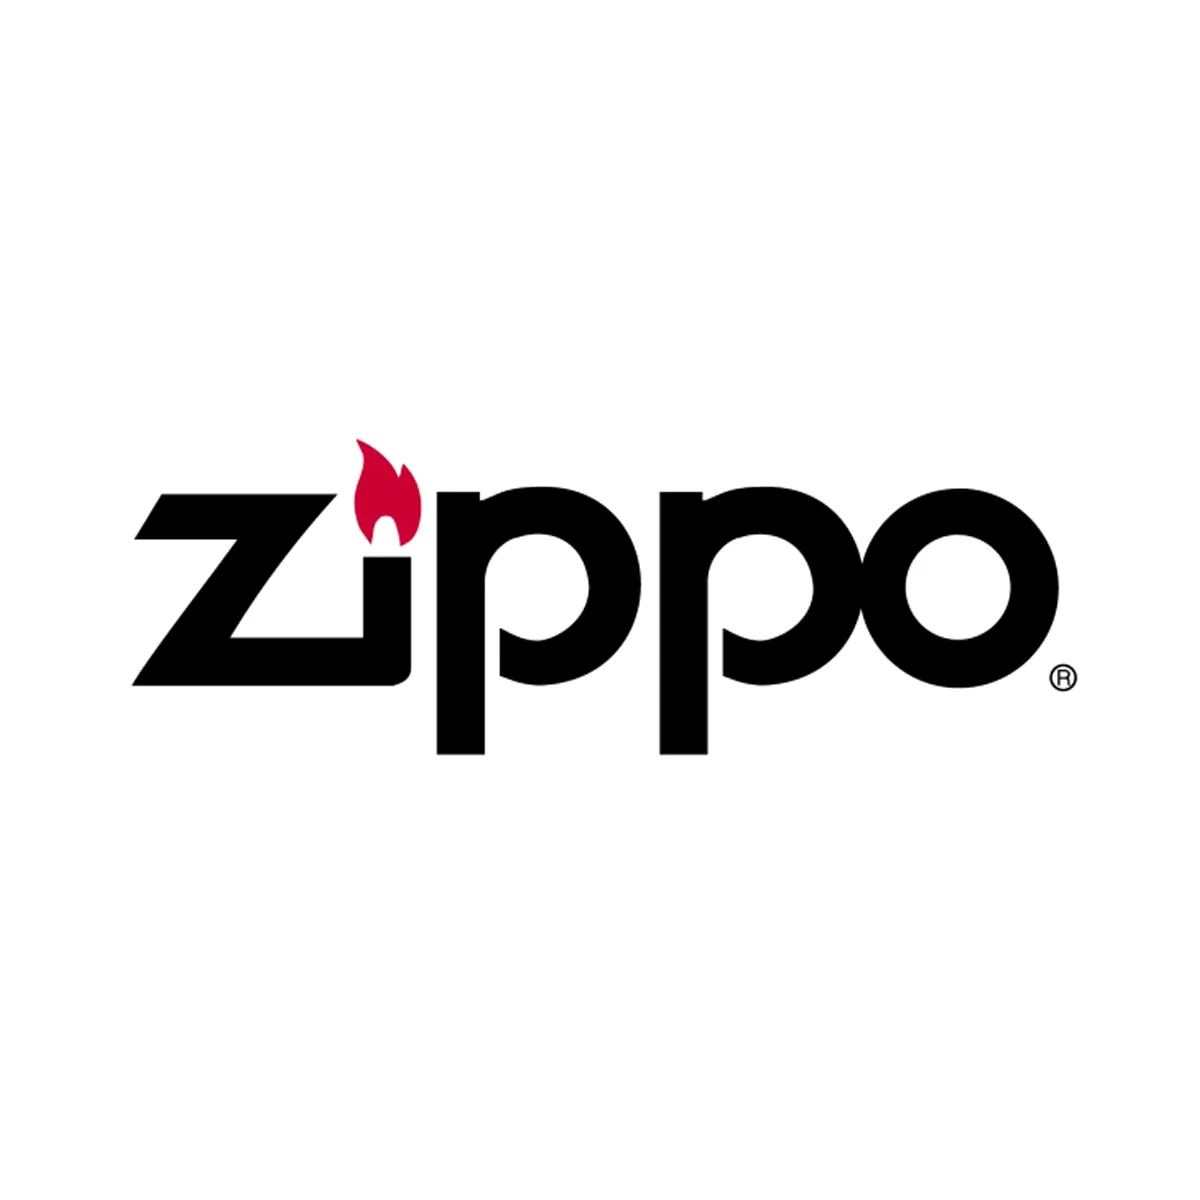 ZIPPO Marke Logo